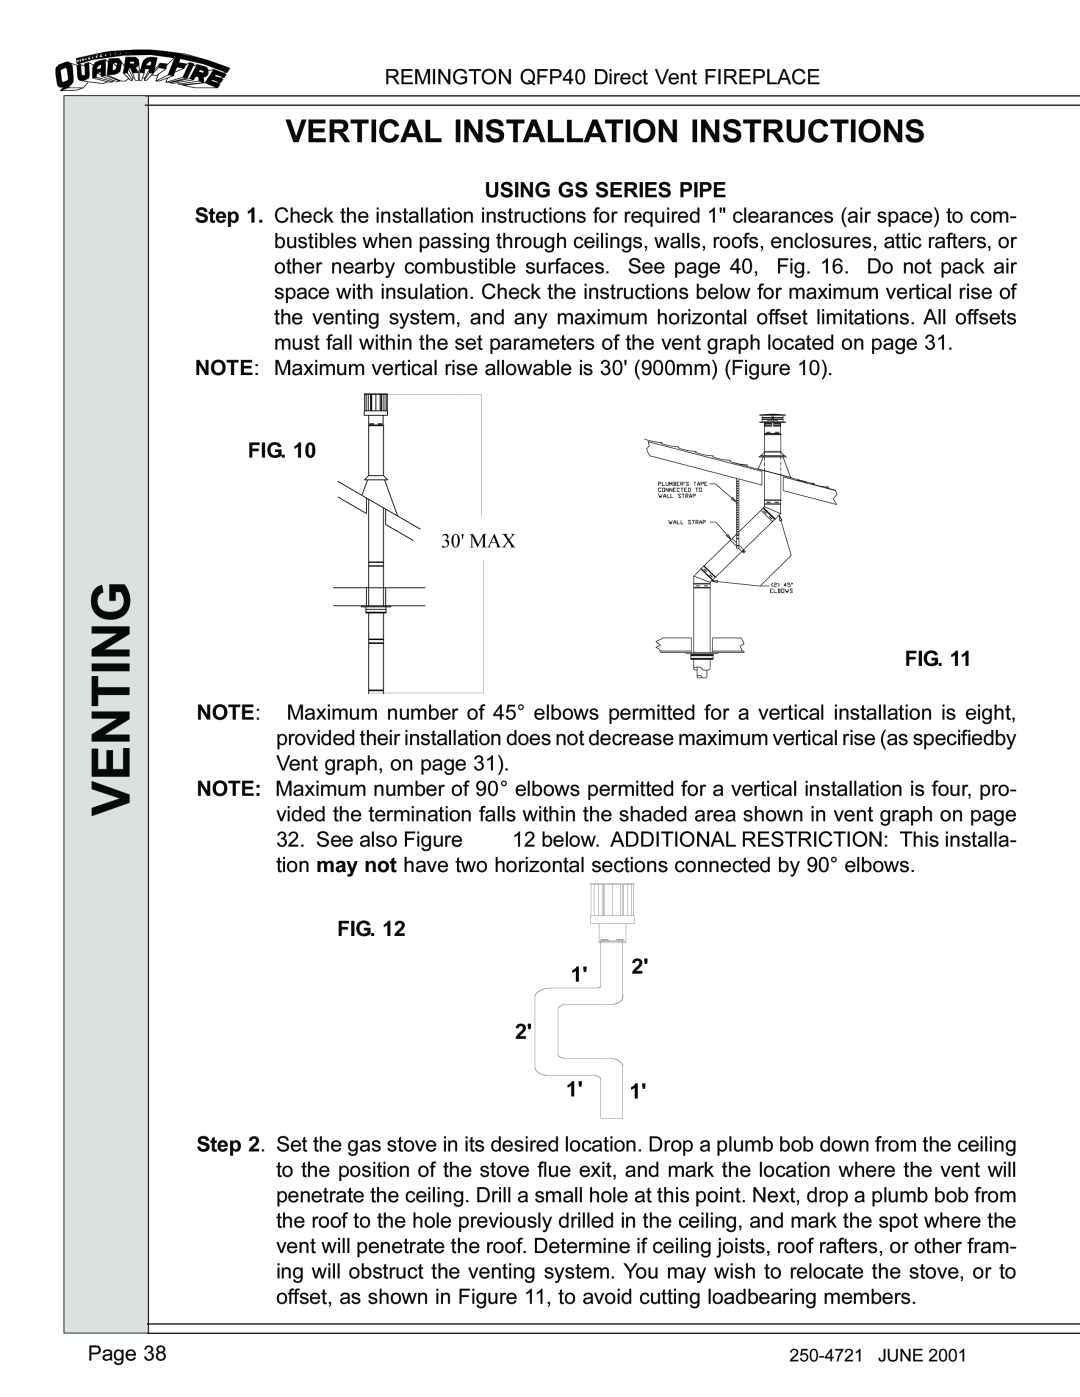 Remington QFP40 manual Vertical Installation Instructions, Venting 